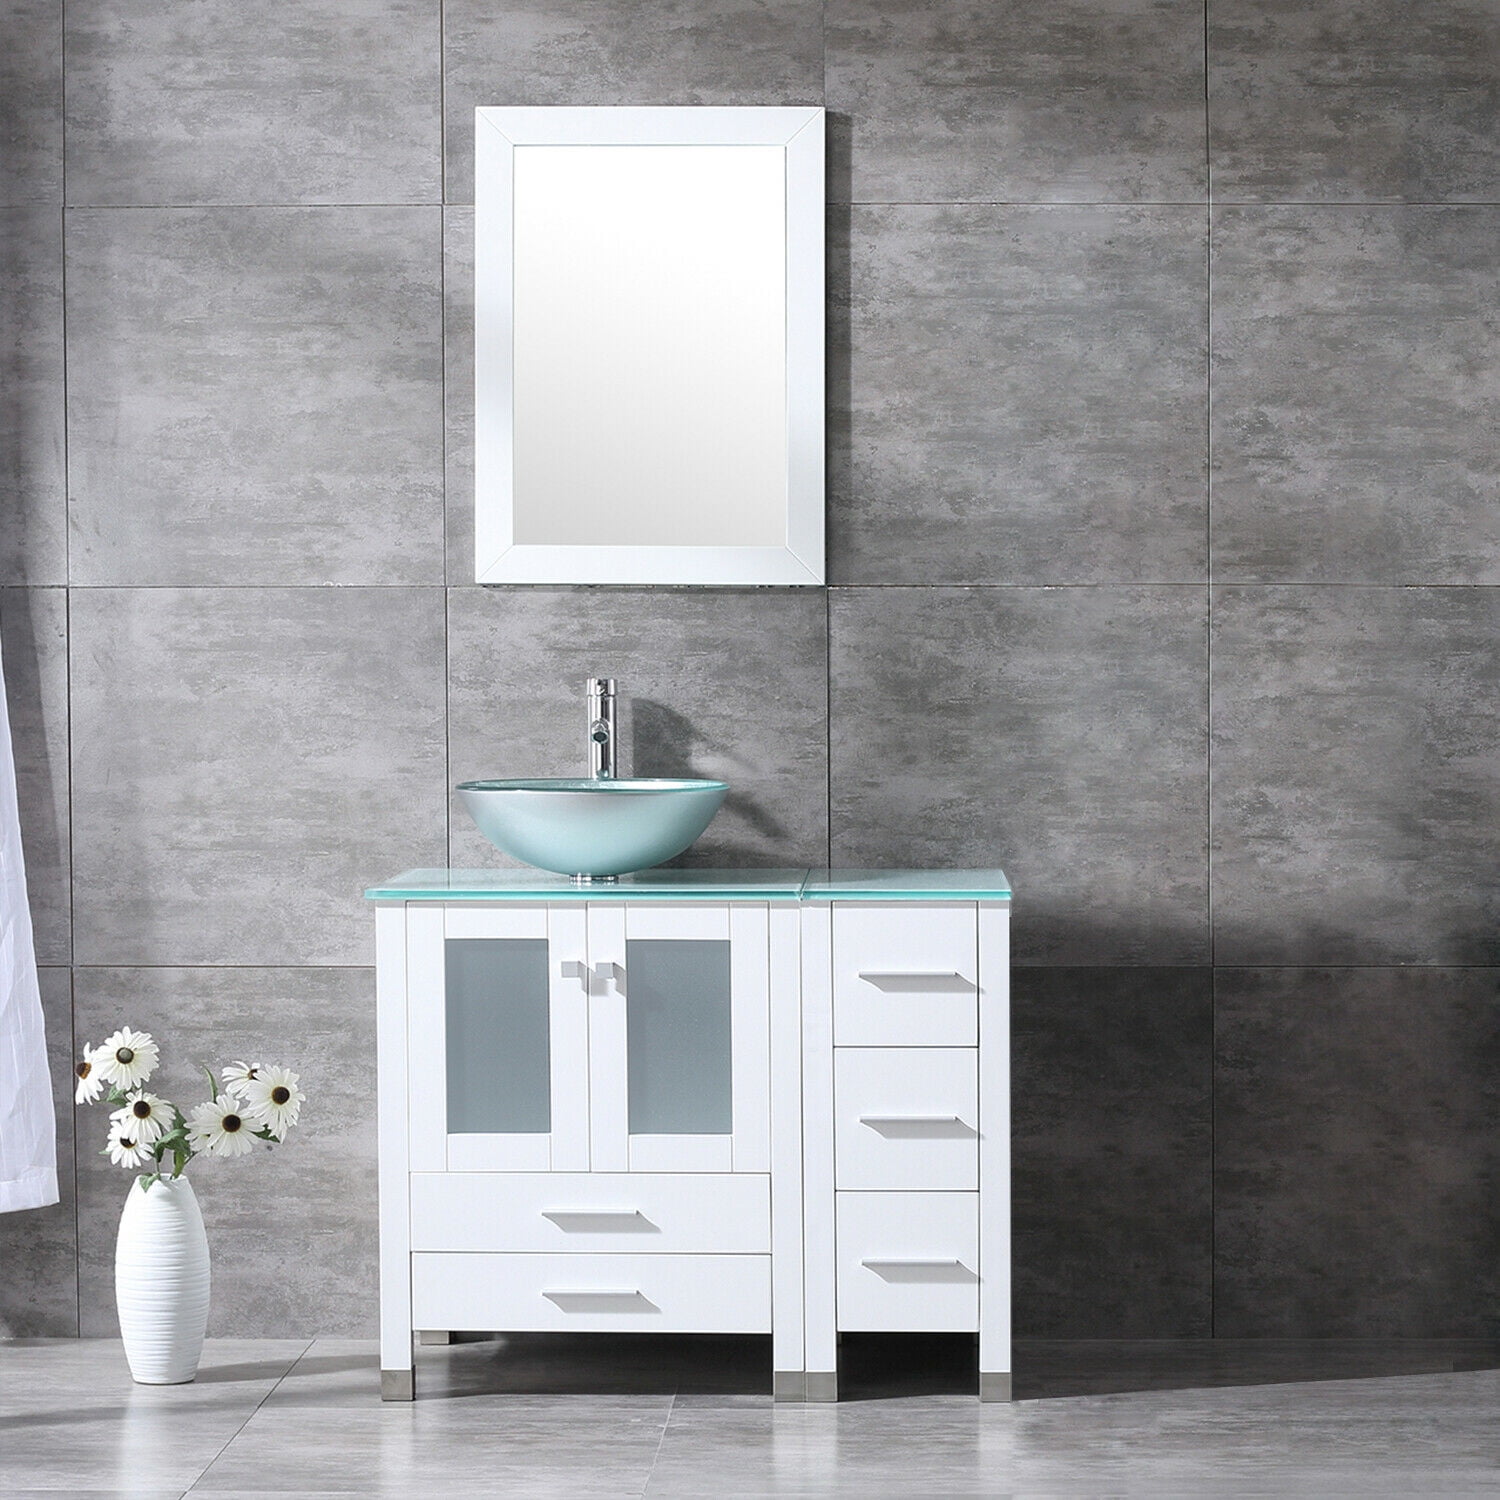 36" Modern Bathroom Vanity Single Cabinet Round Vessel Sink Glass